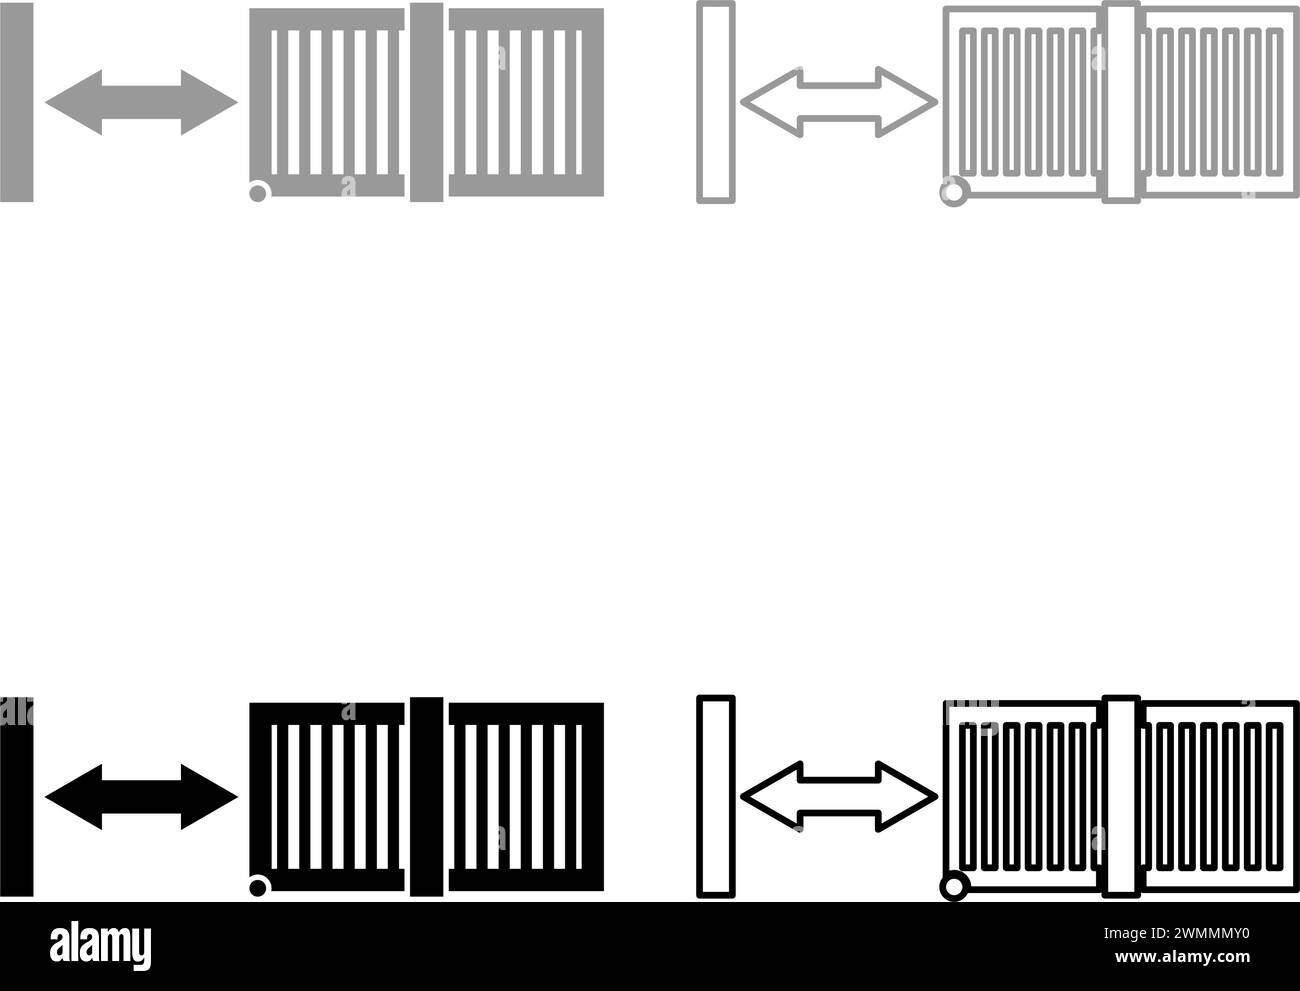 Sliding gates automatic lattice fence system entry enclosure set icon grey black color vector illustration image simple solid fill outline contour Stock Vector